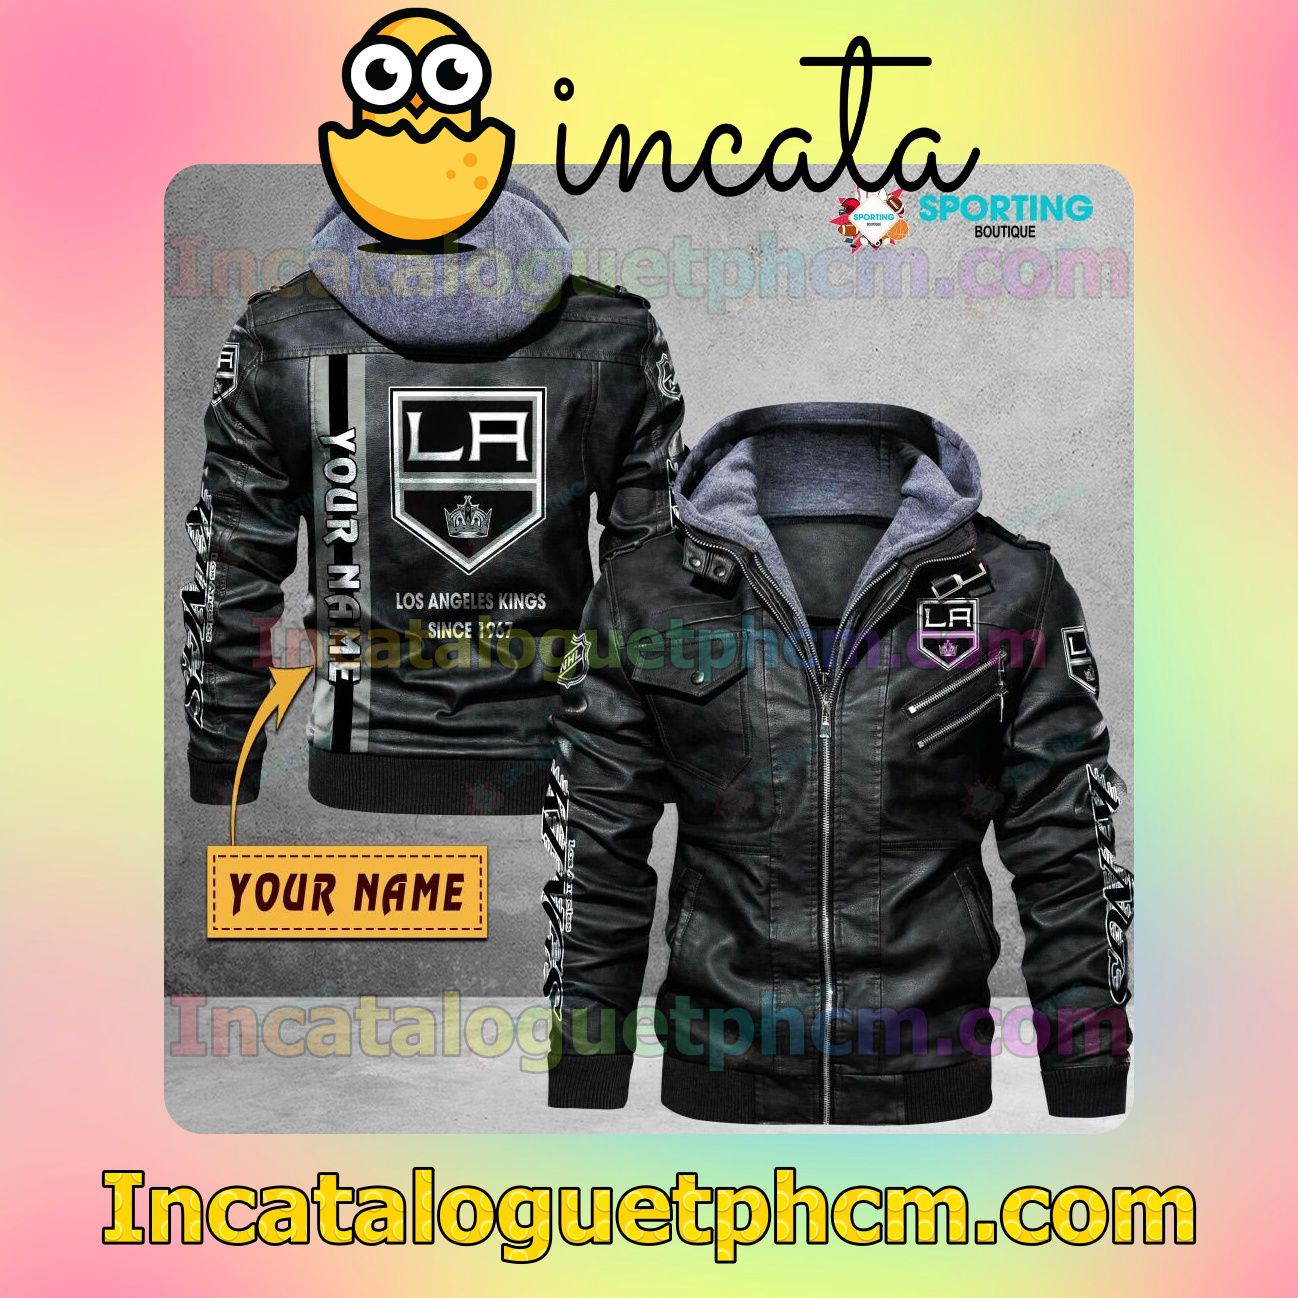 Los Angeles Kings Customize Brand Uniform Leather Jacket